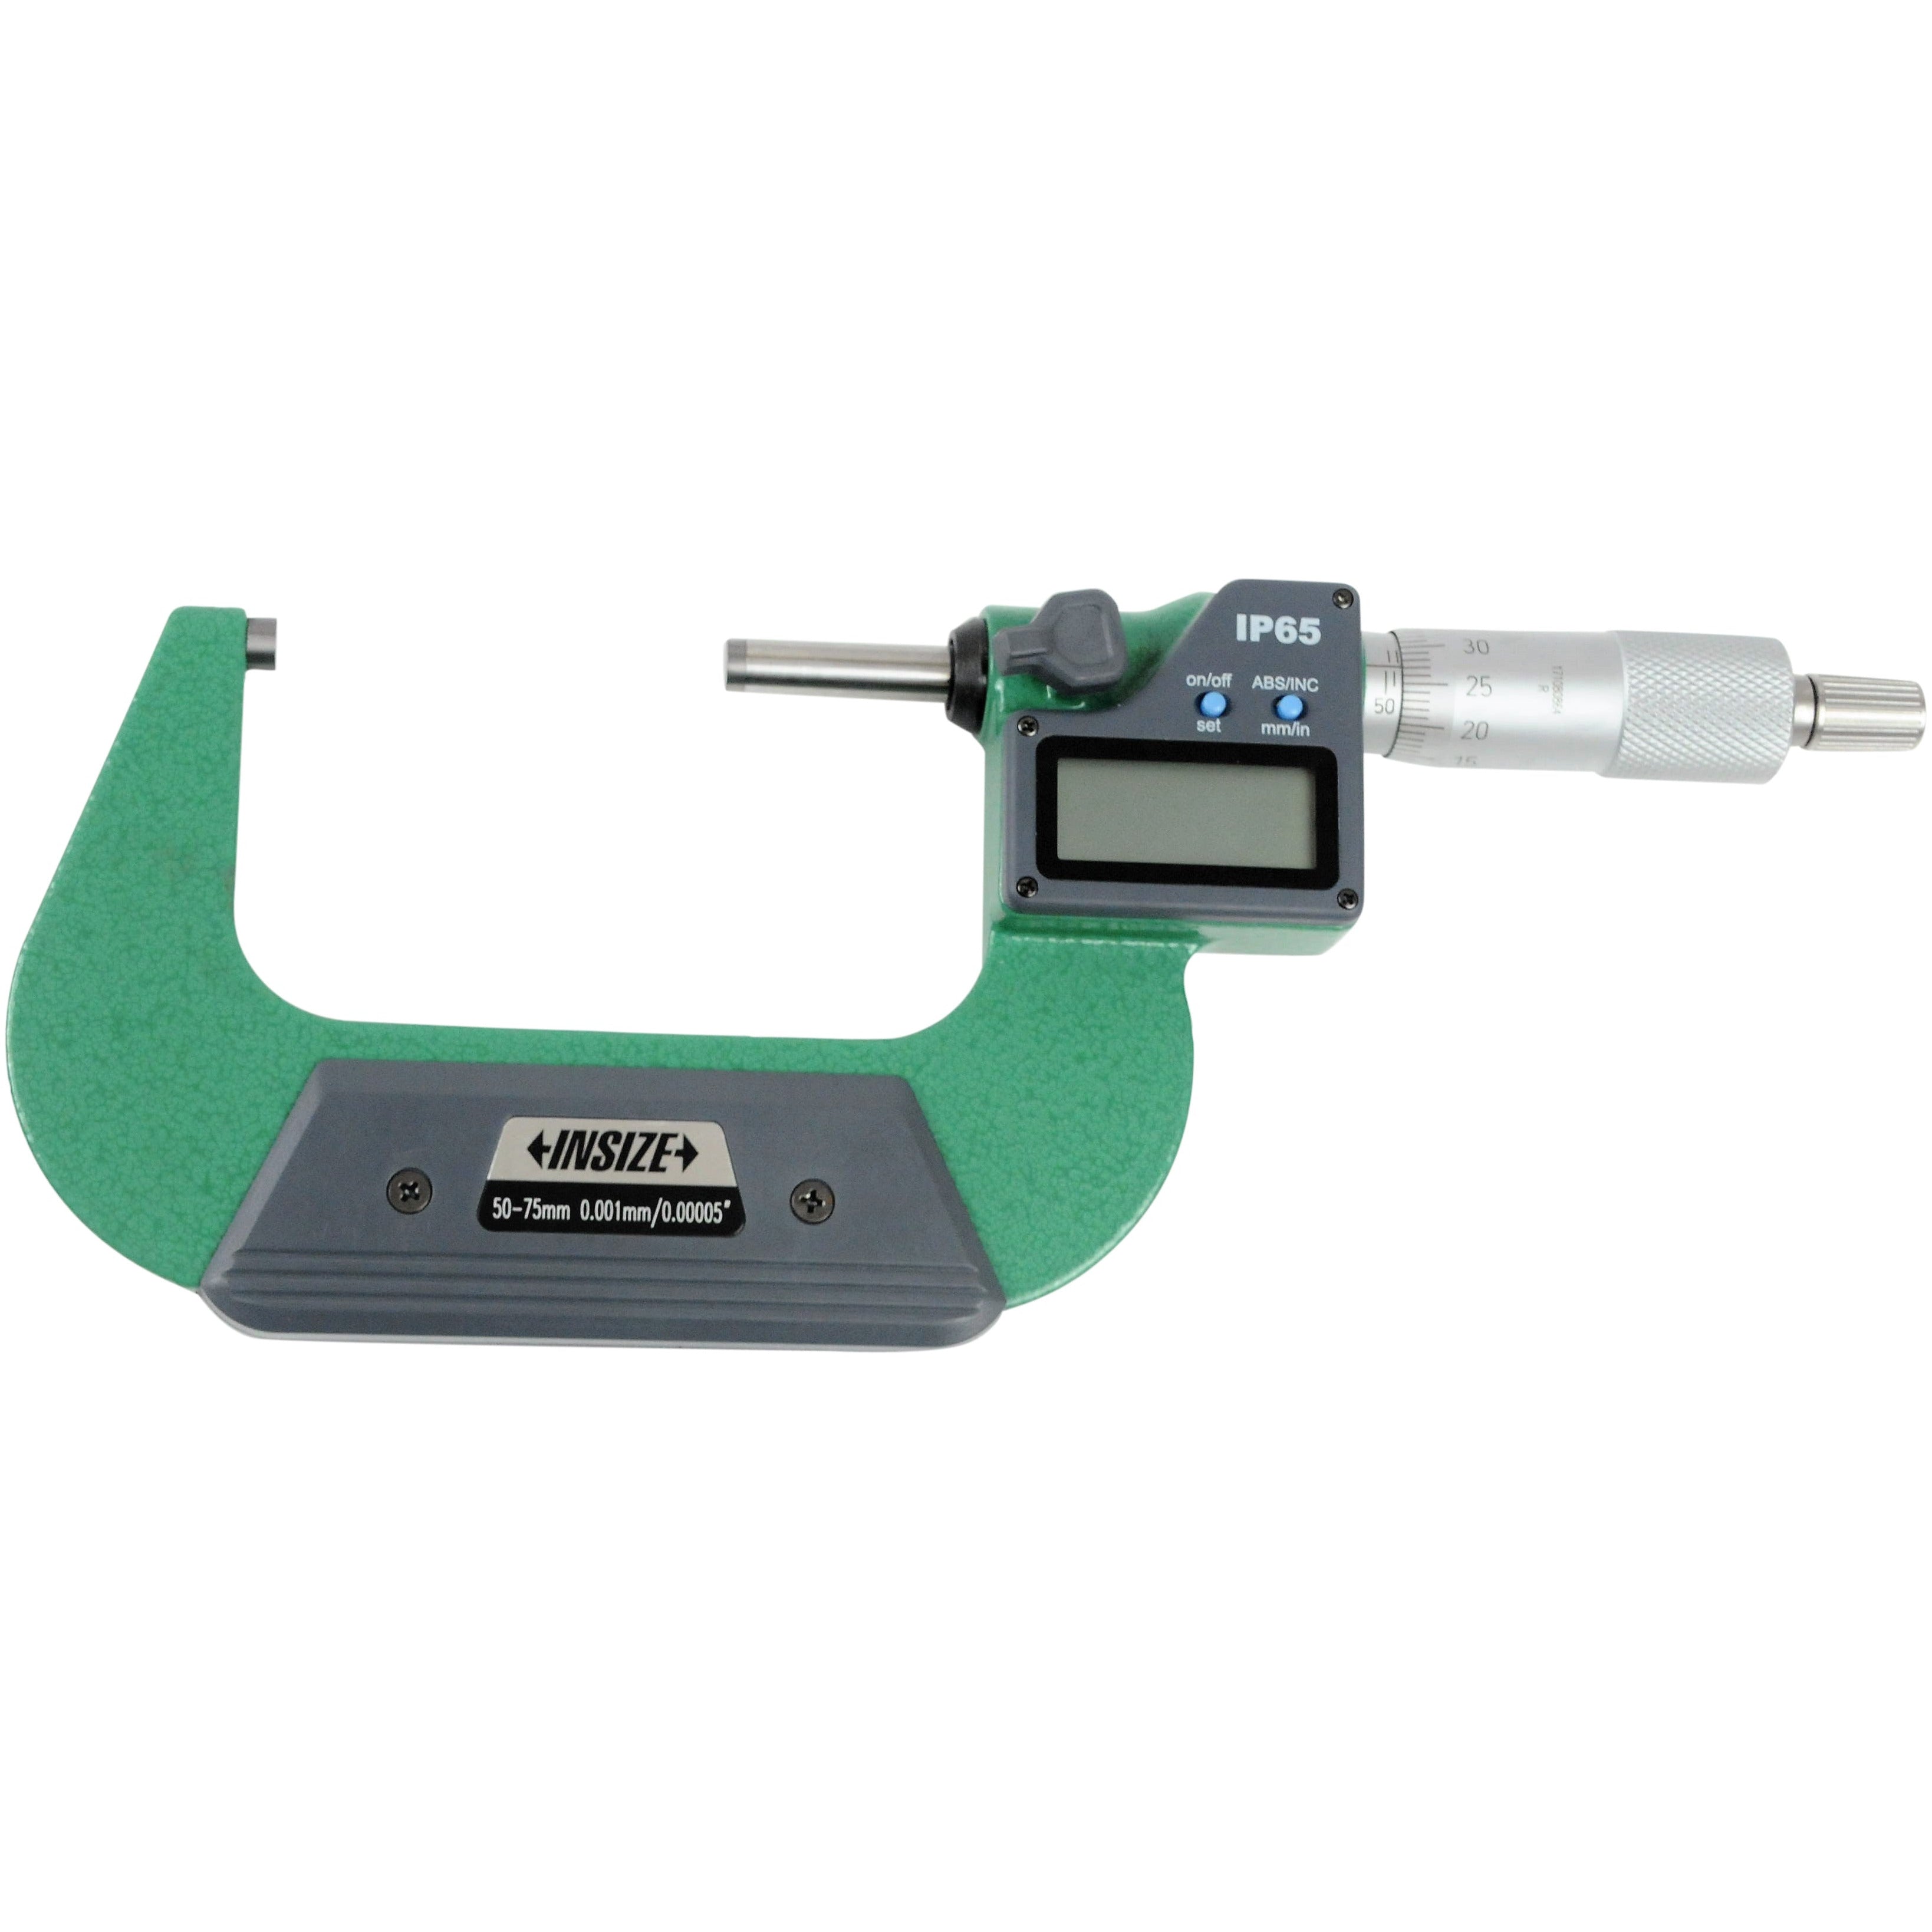 Insize IP65 Digital Outside Micrometer 50-75mm / 2-3" Range Series 3101-75A